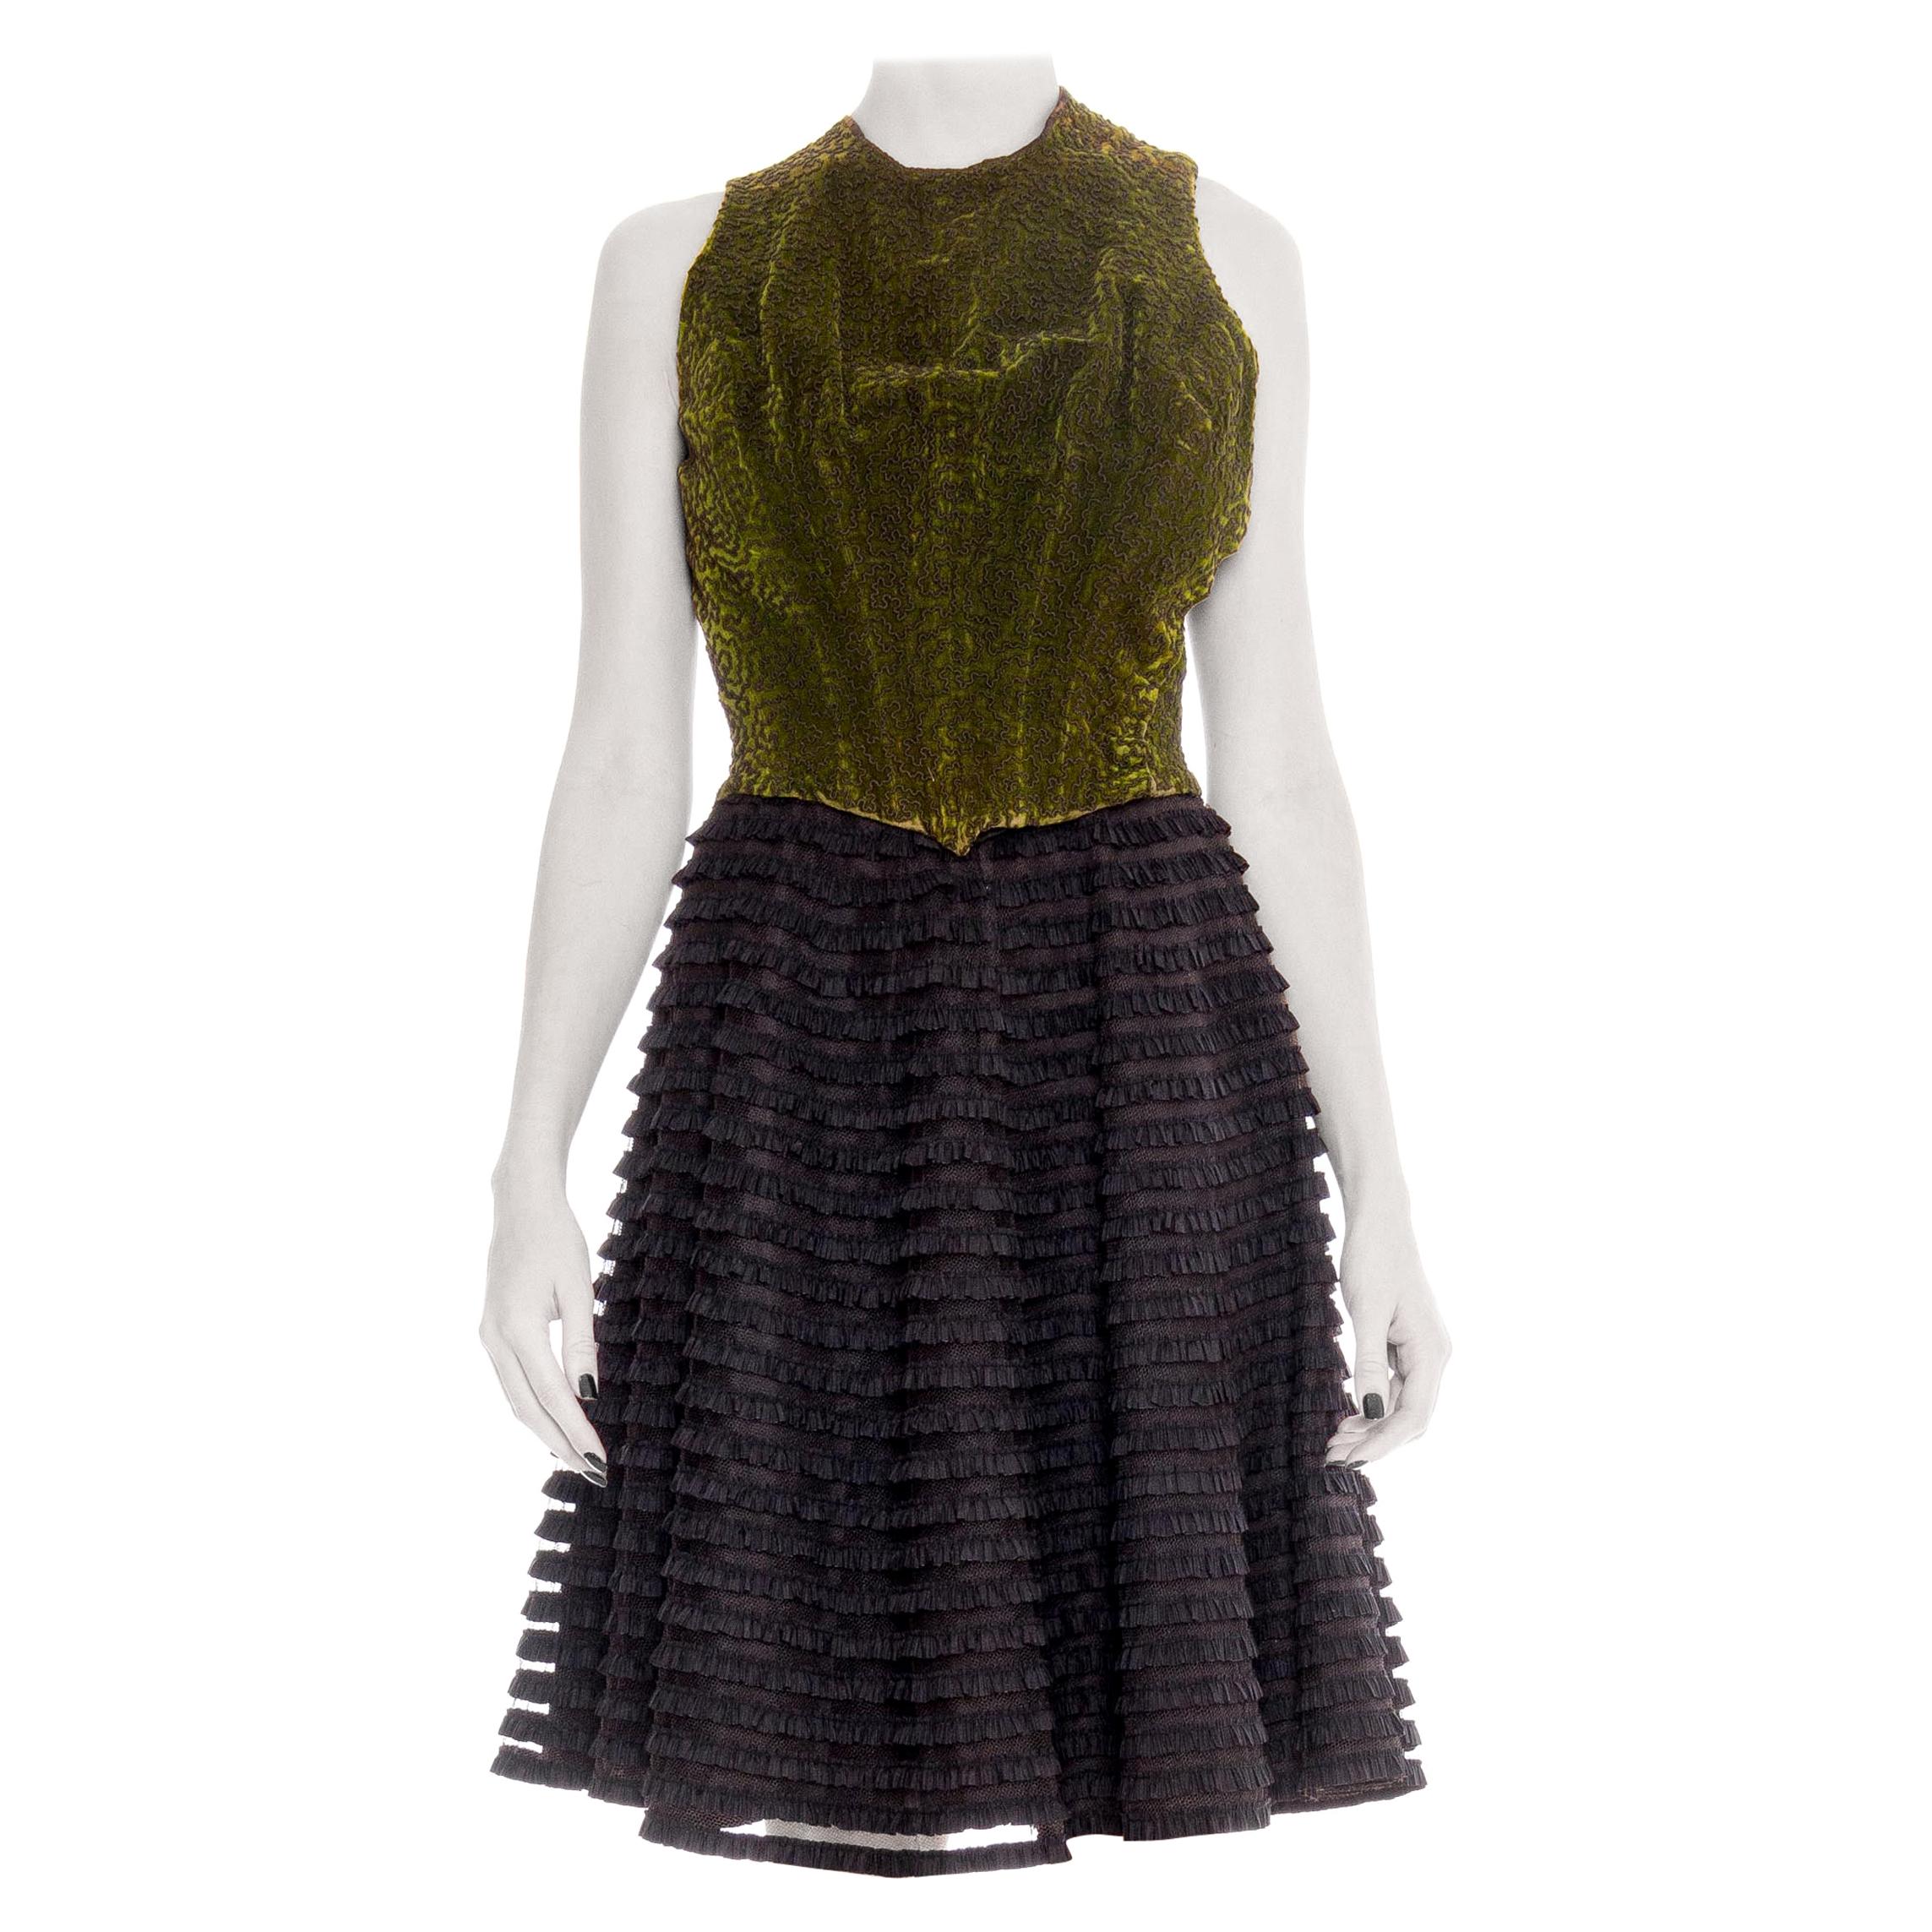 MORPHEW COLLECTION Black & Green Silk Cotton Velvet Dress With Ruffled Tulle Sk